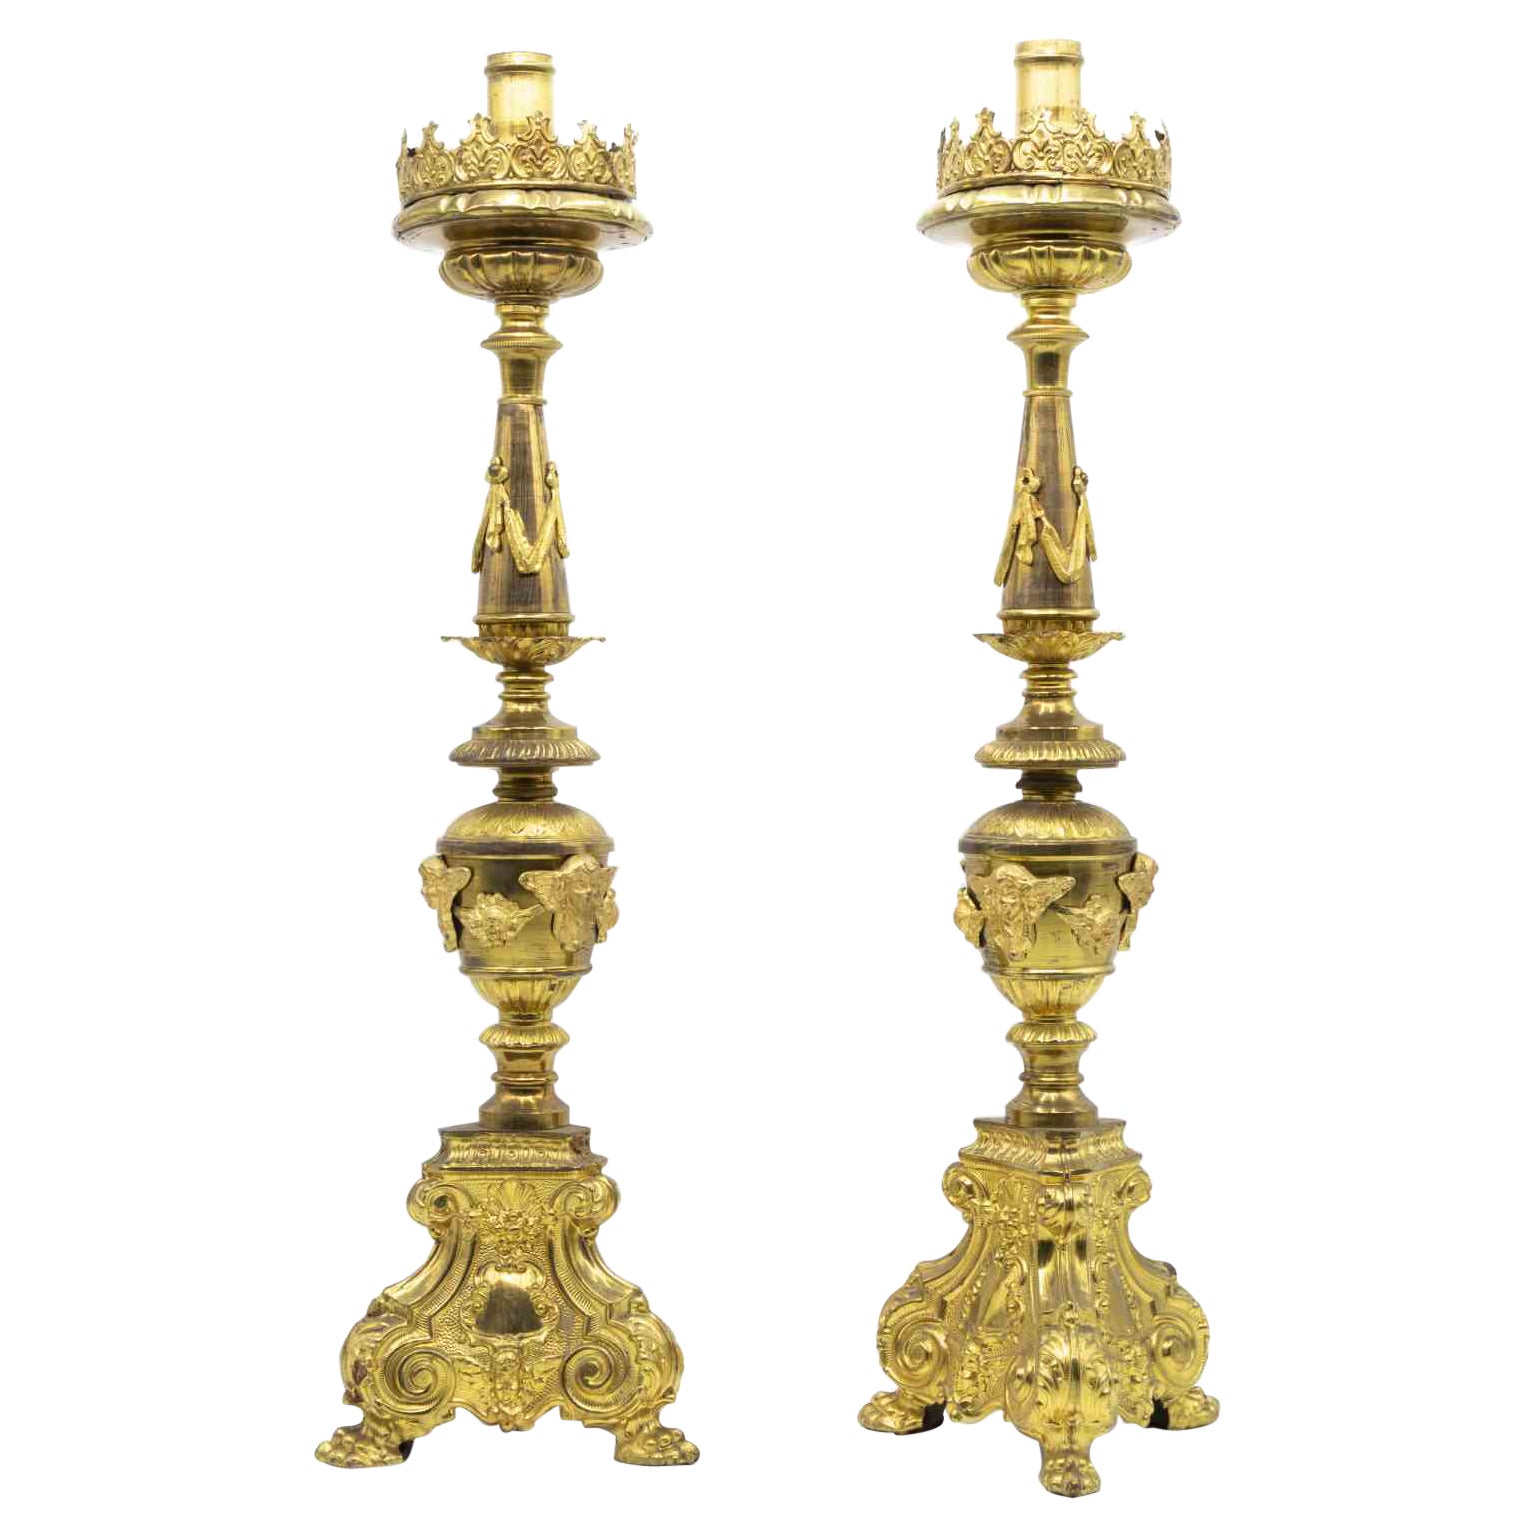 Vintage Pair of Candlesticks, Italian Baroque Style, 19th Century